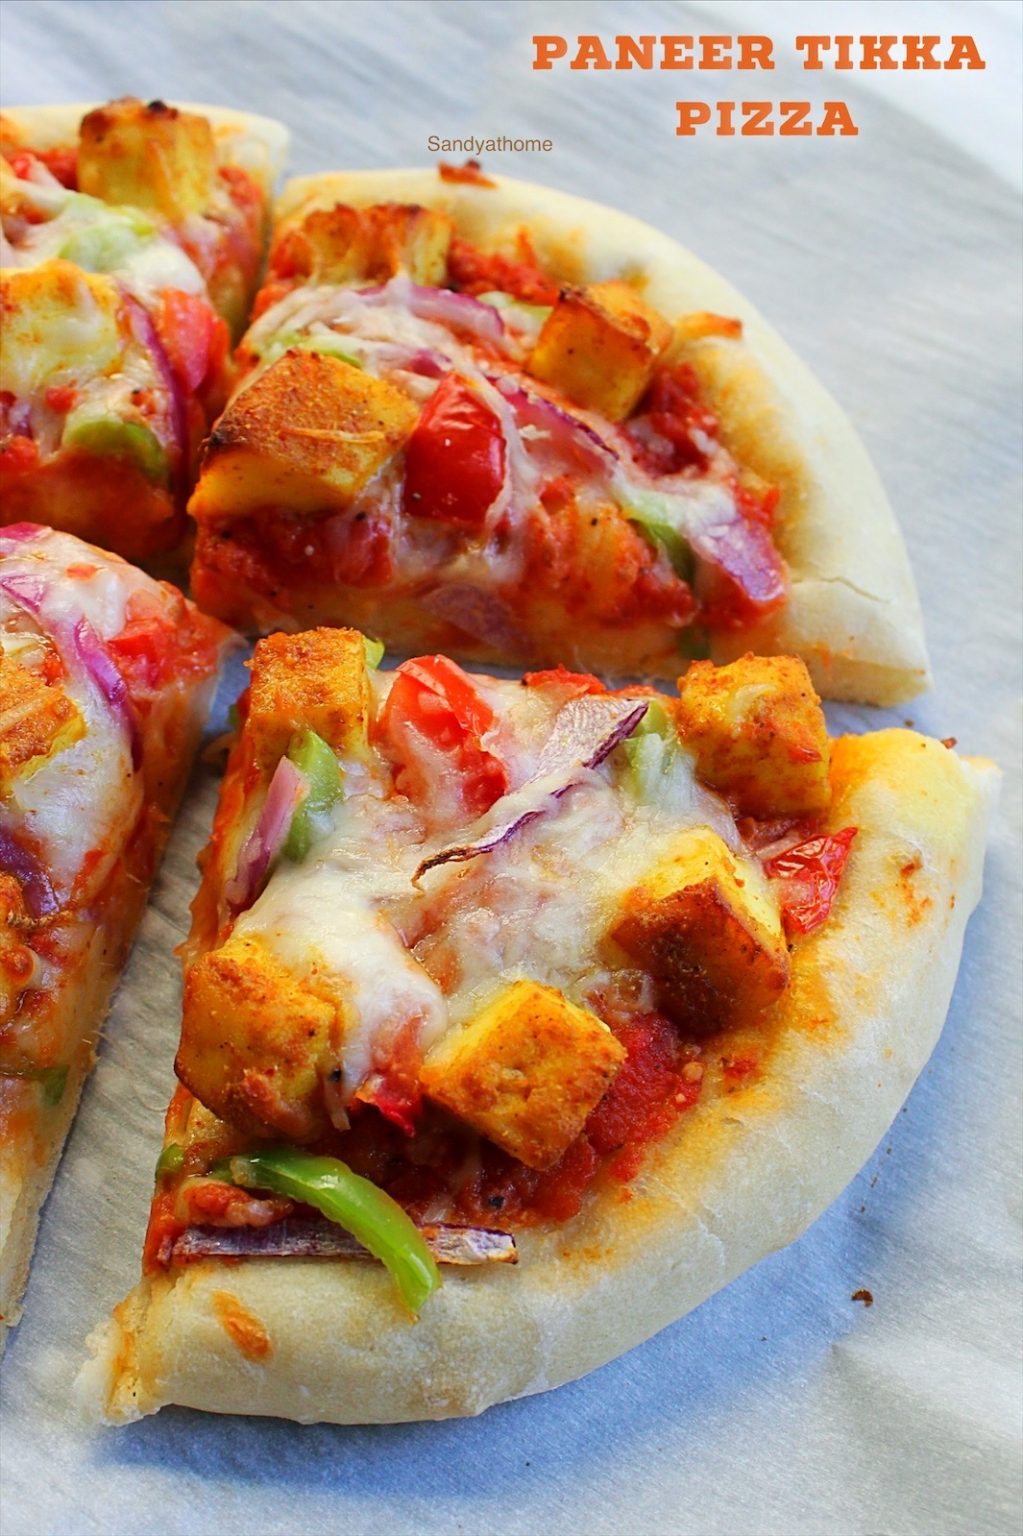 Paneer tikka pizza recipe, Paneer pizza - Sandhya's recipes